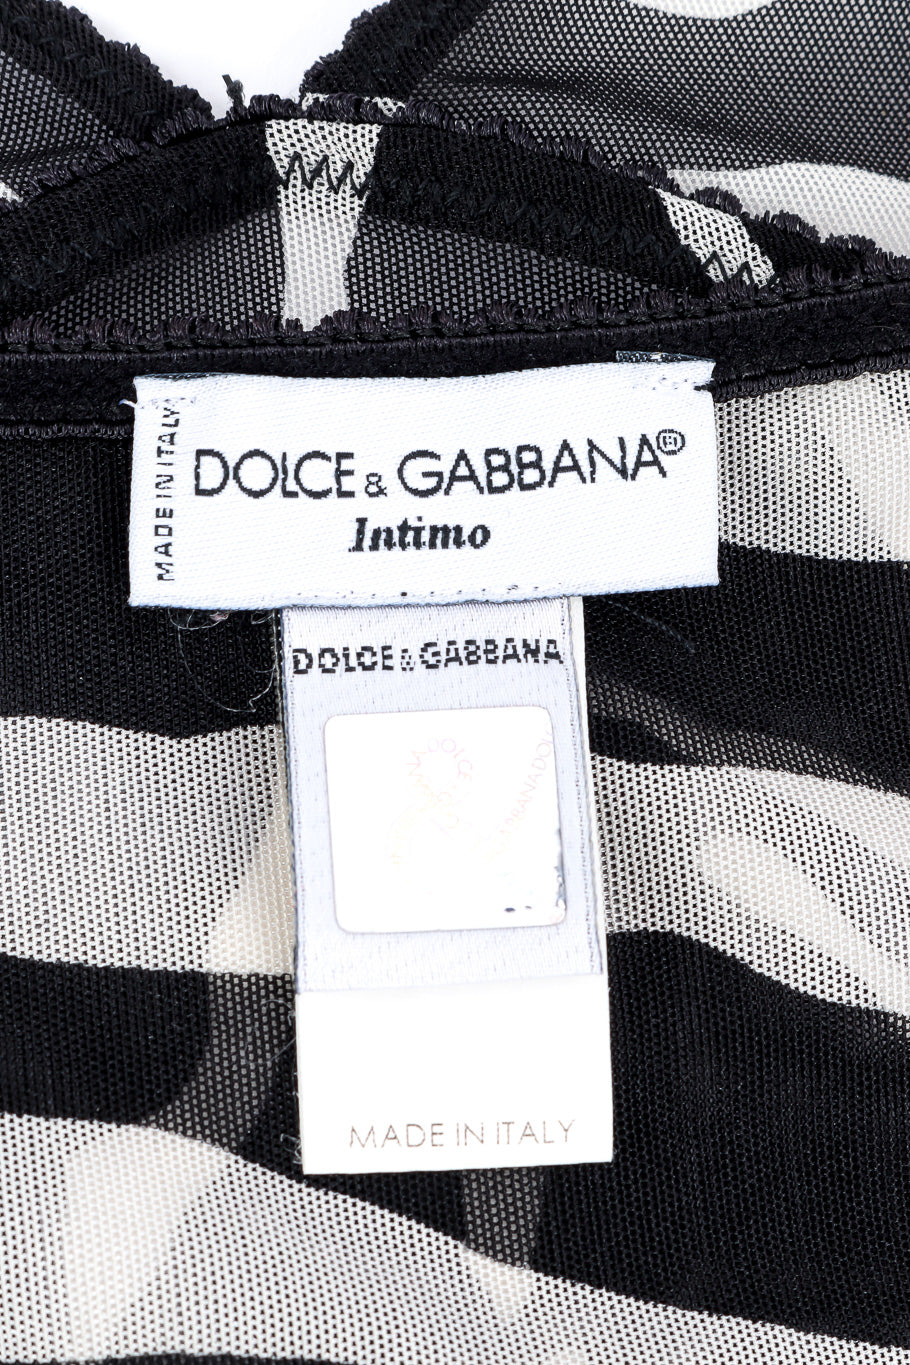 Dolce & Gabbana zebra print mesh camisole top designer label @recessla